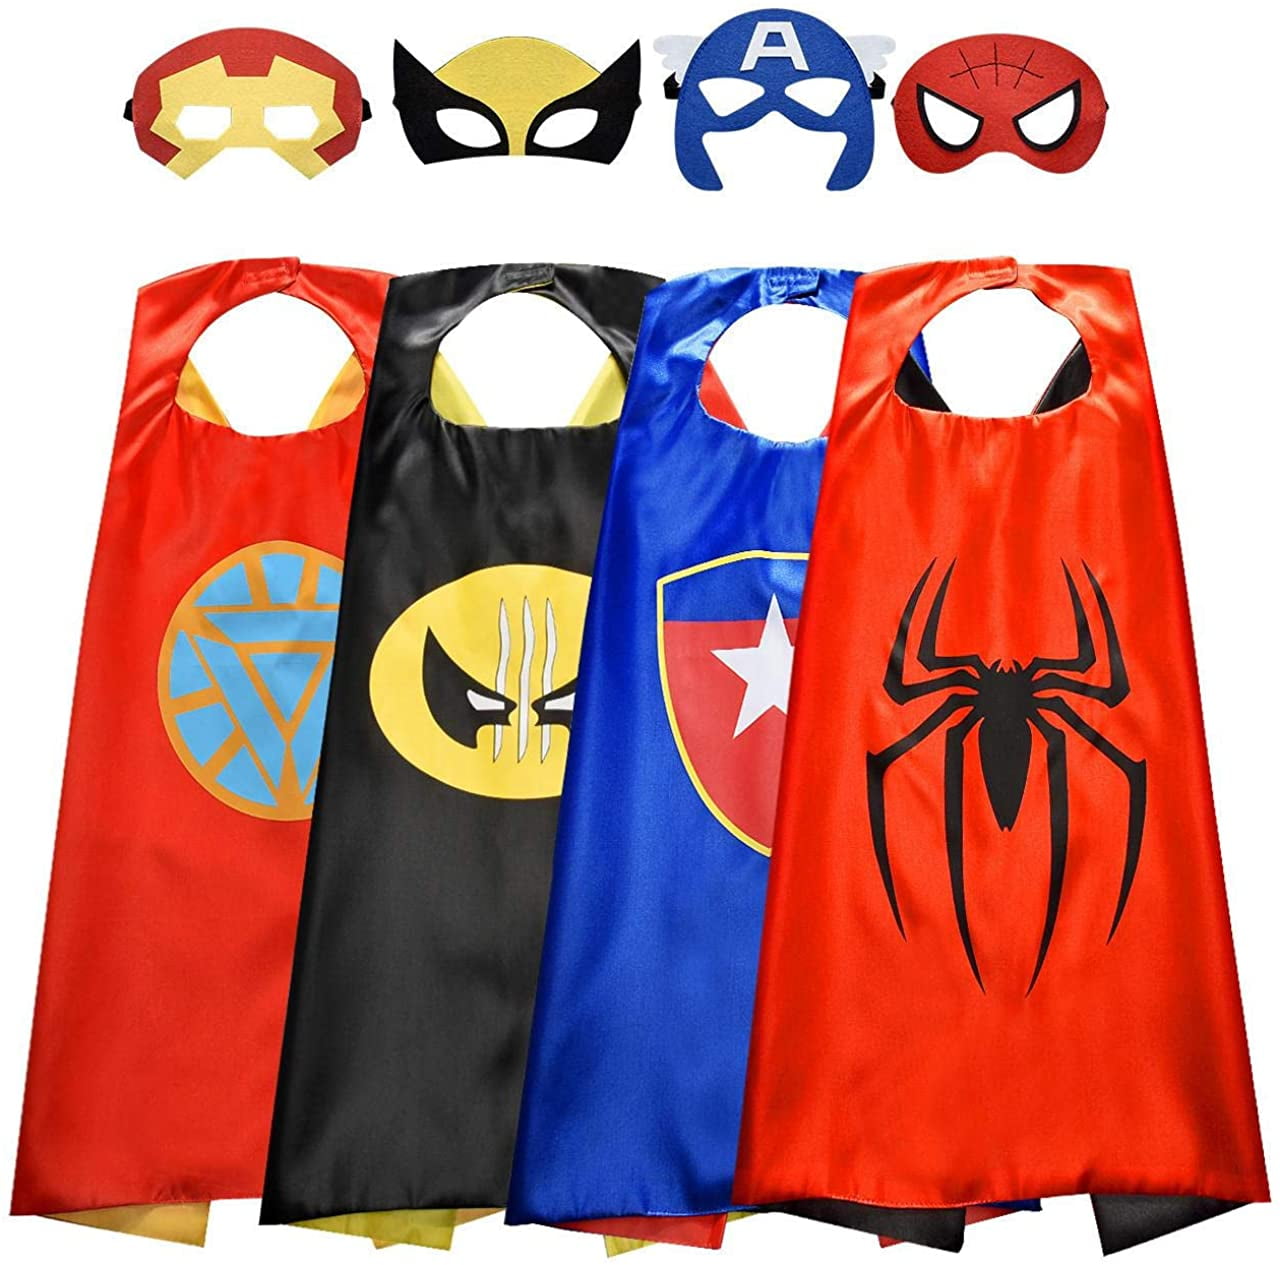 Details about   Kids Dress Up 5PCS Superhero Capes Set and Slap Bracelets for Costumes Birthday 